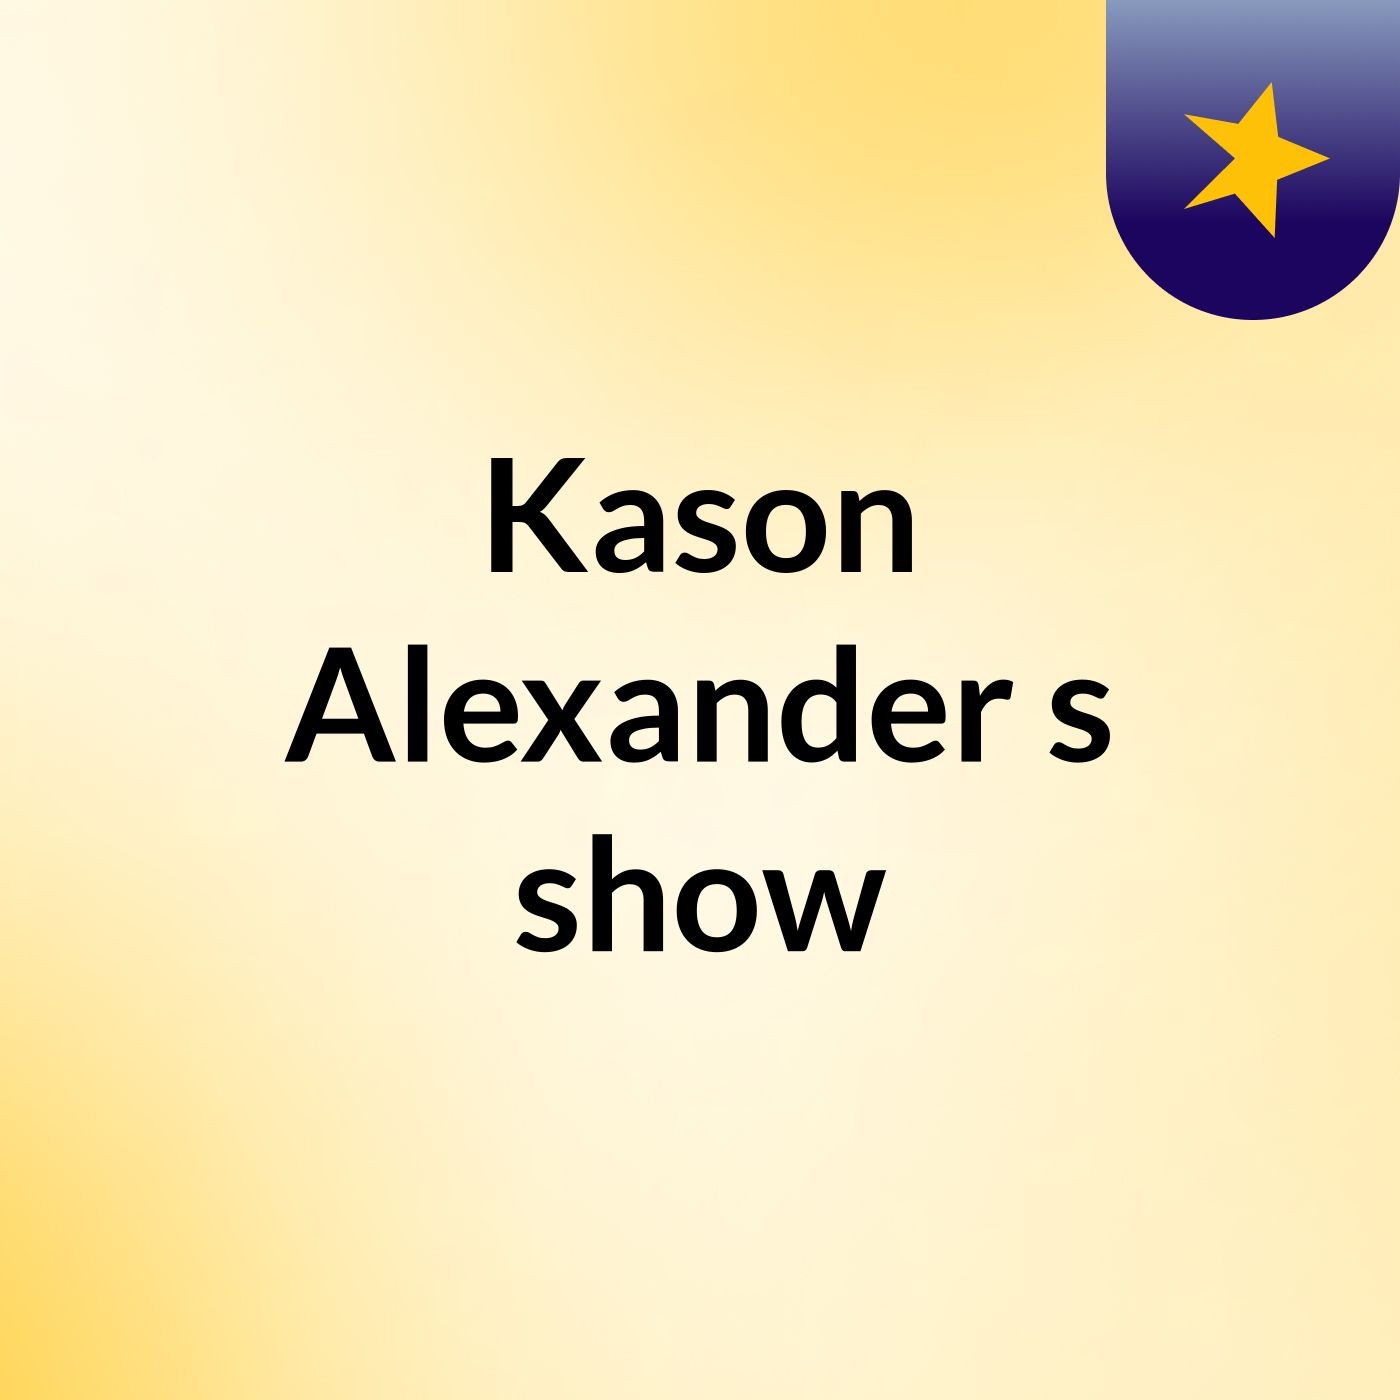 Kason Alexander's show